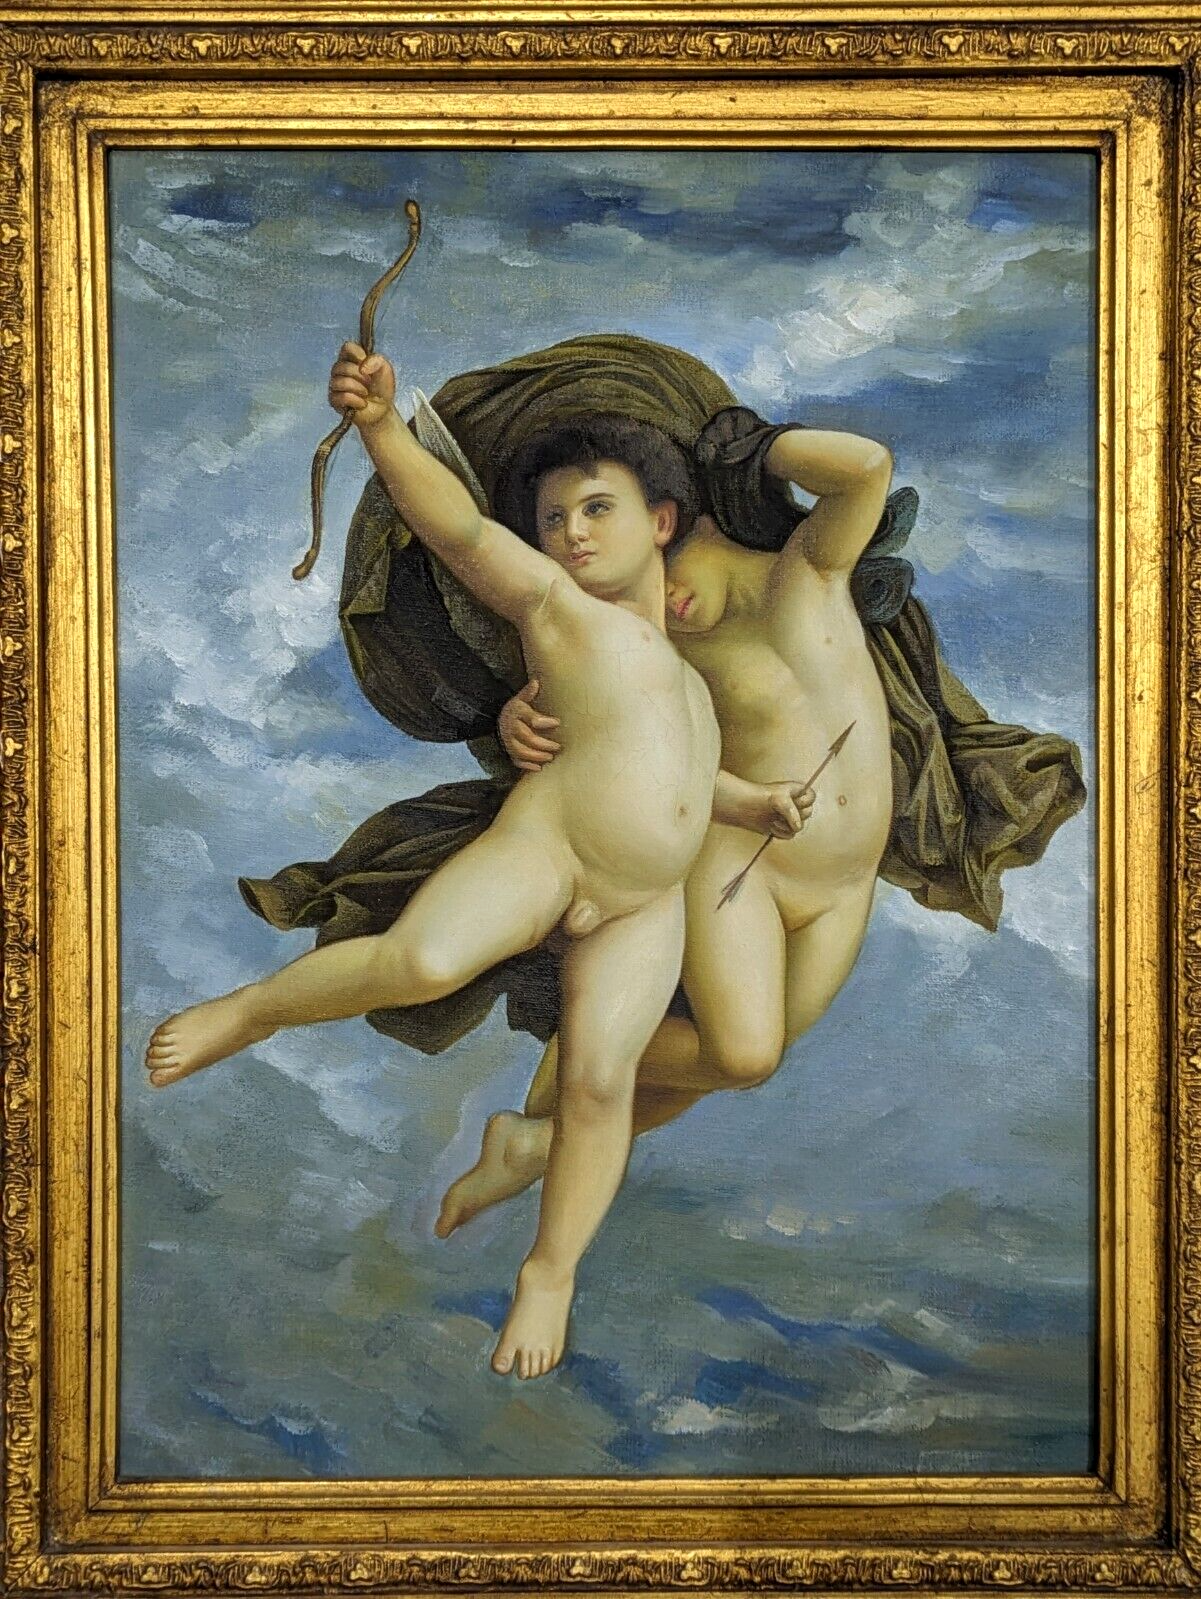 Classical Oil Painting After Adolphe-William Bouguereau Cupid Victorious L'Amour Vainqueur Mythological Cherub Academic Genre